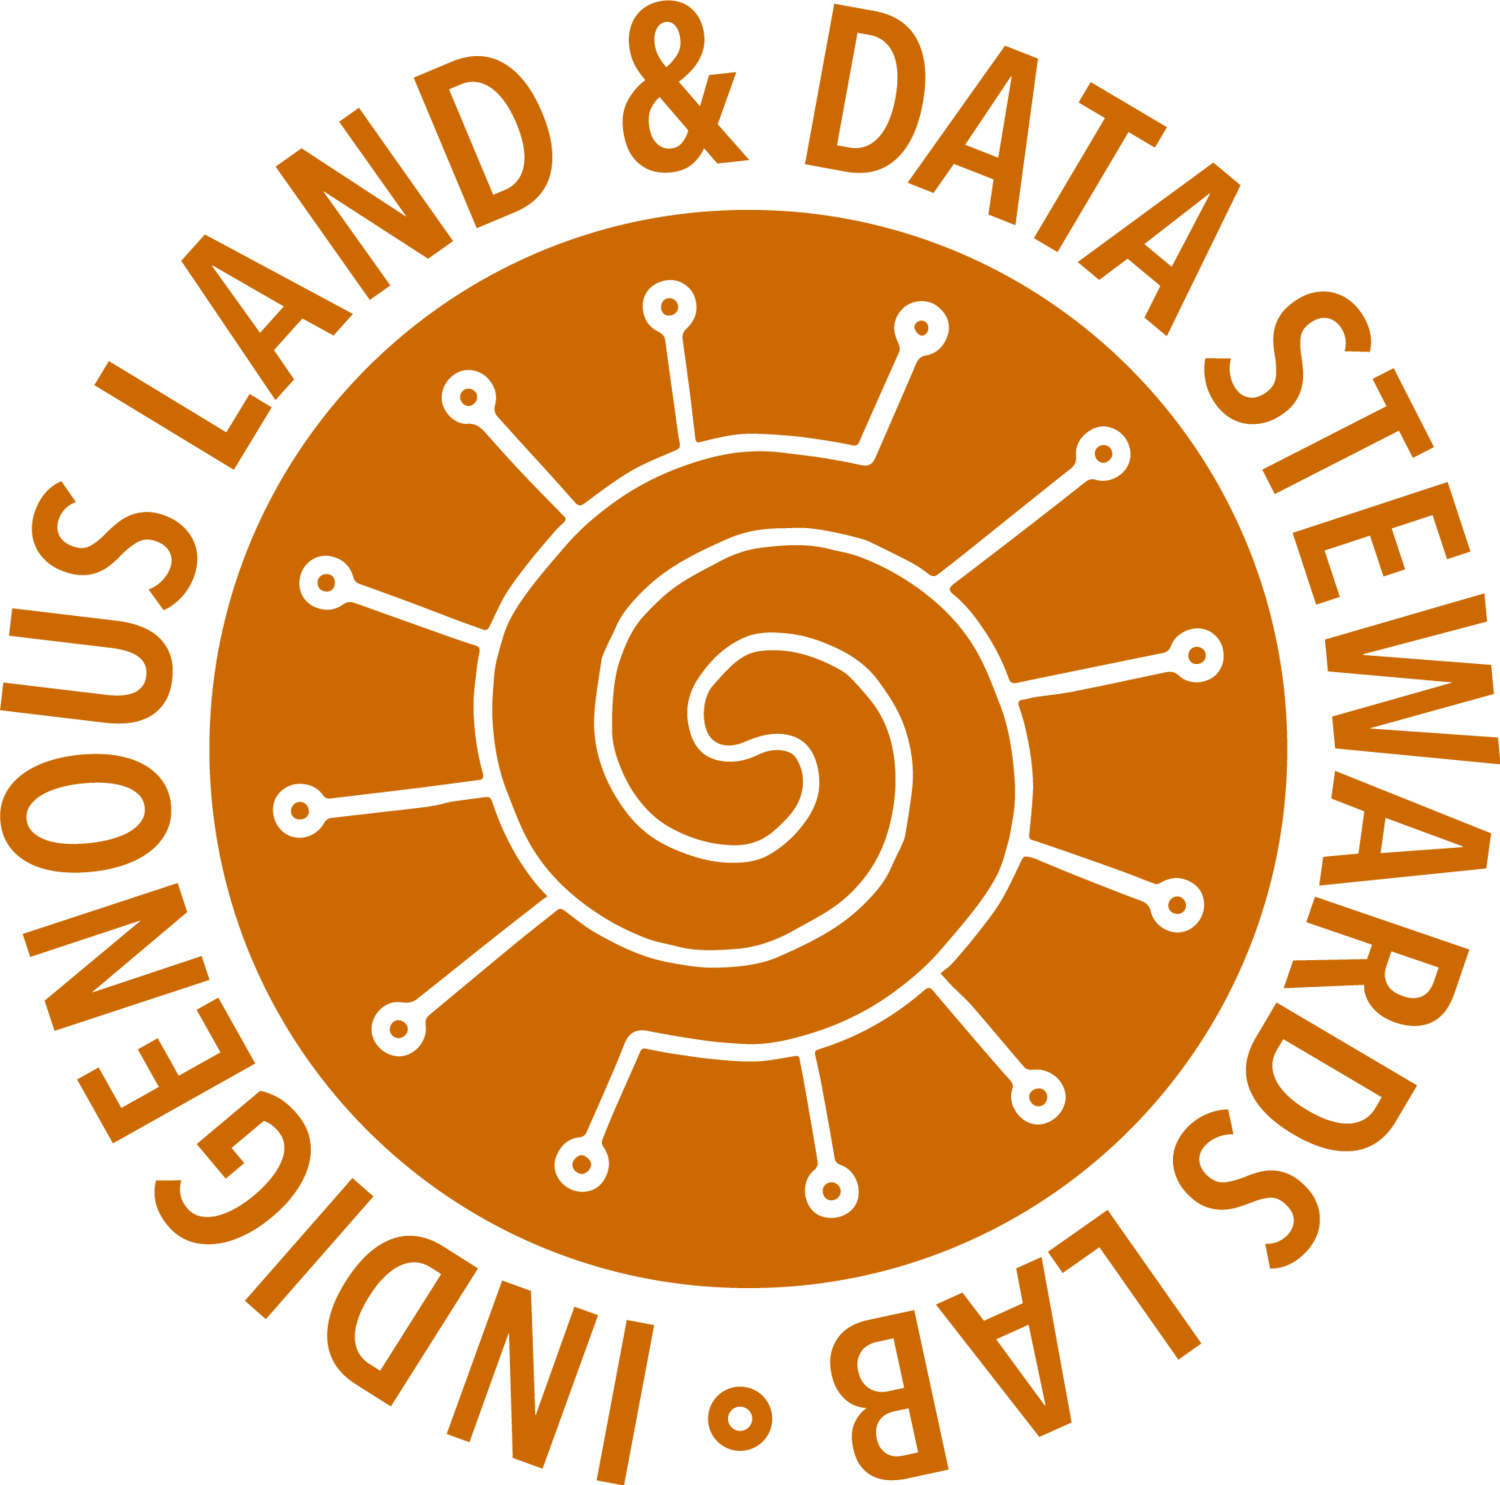 Indigenous Land & Data Stewards Lab